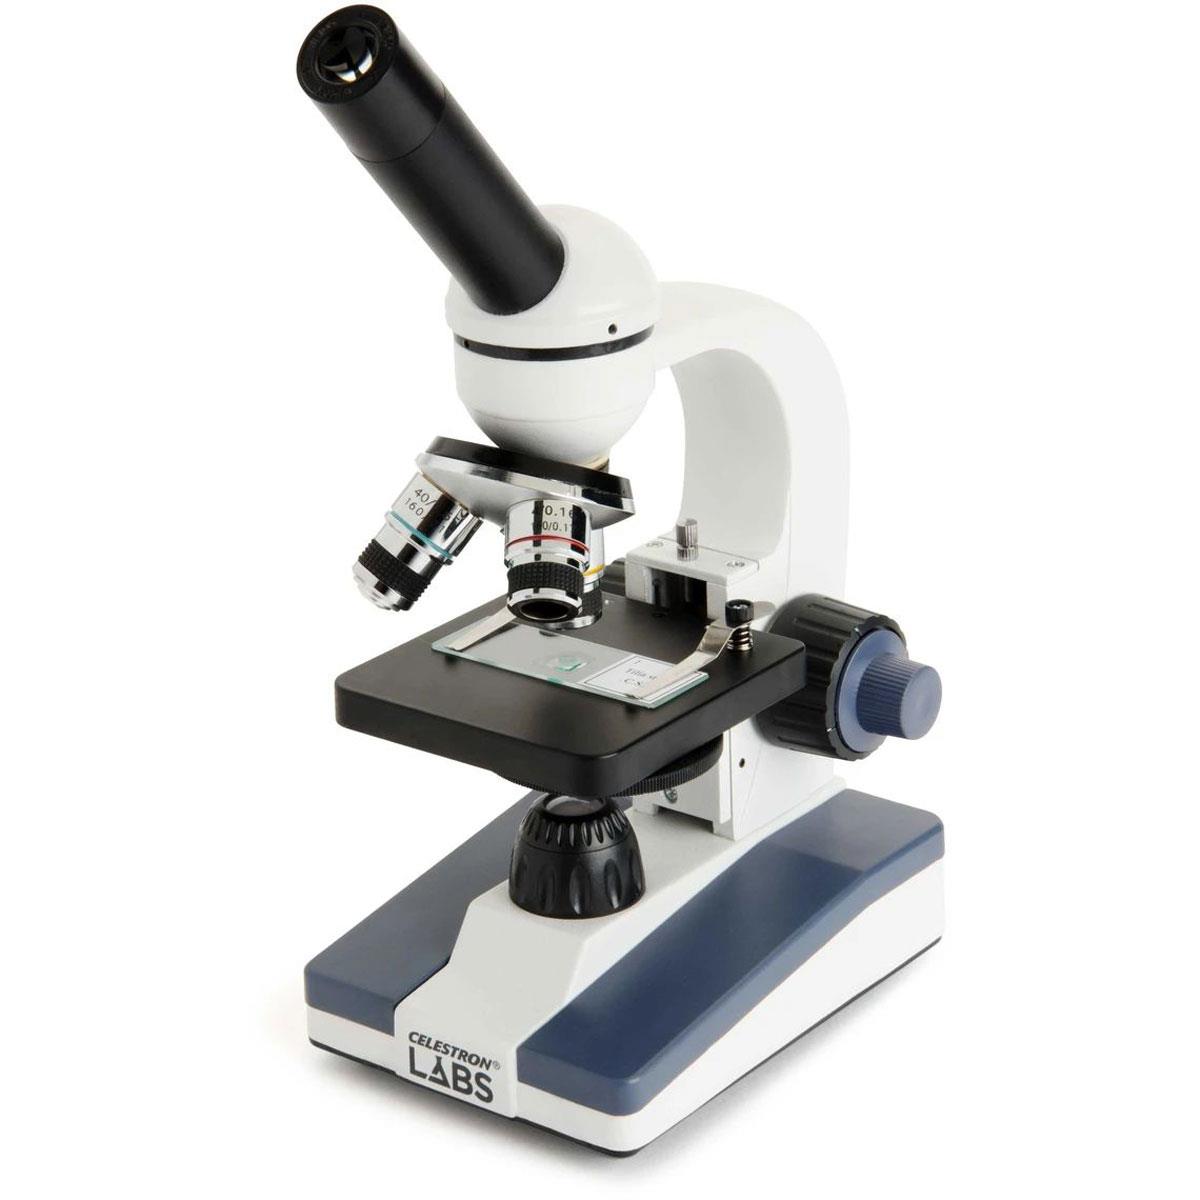 

Celestron Labs CM1000C Compound Monocular Microscope